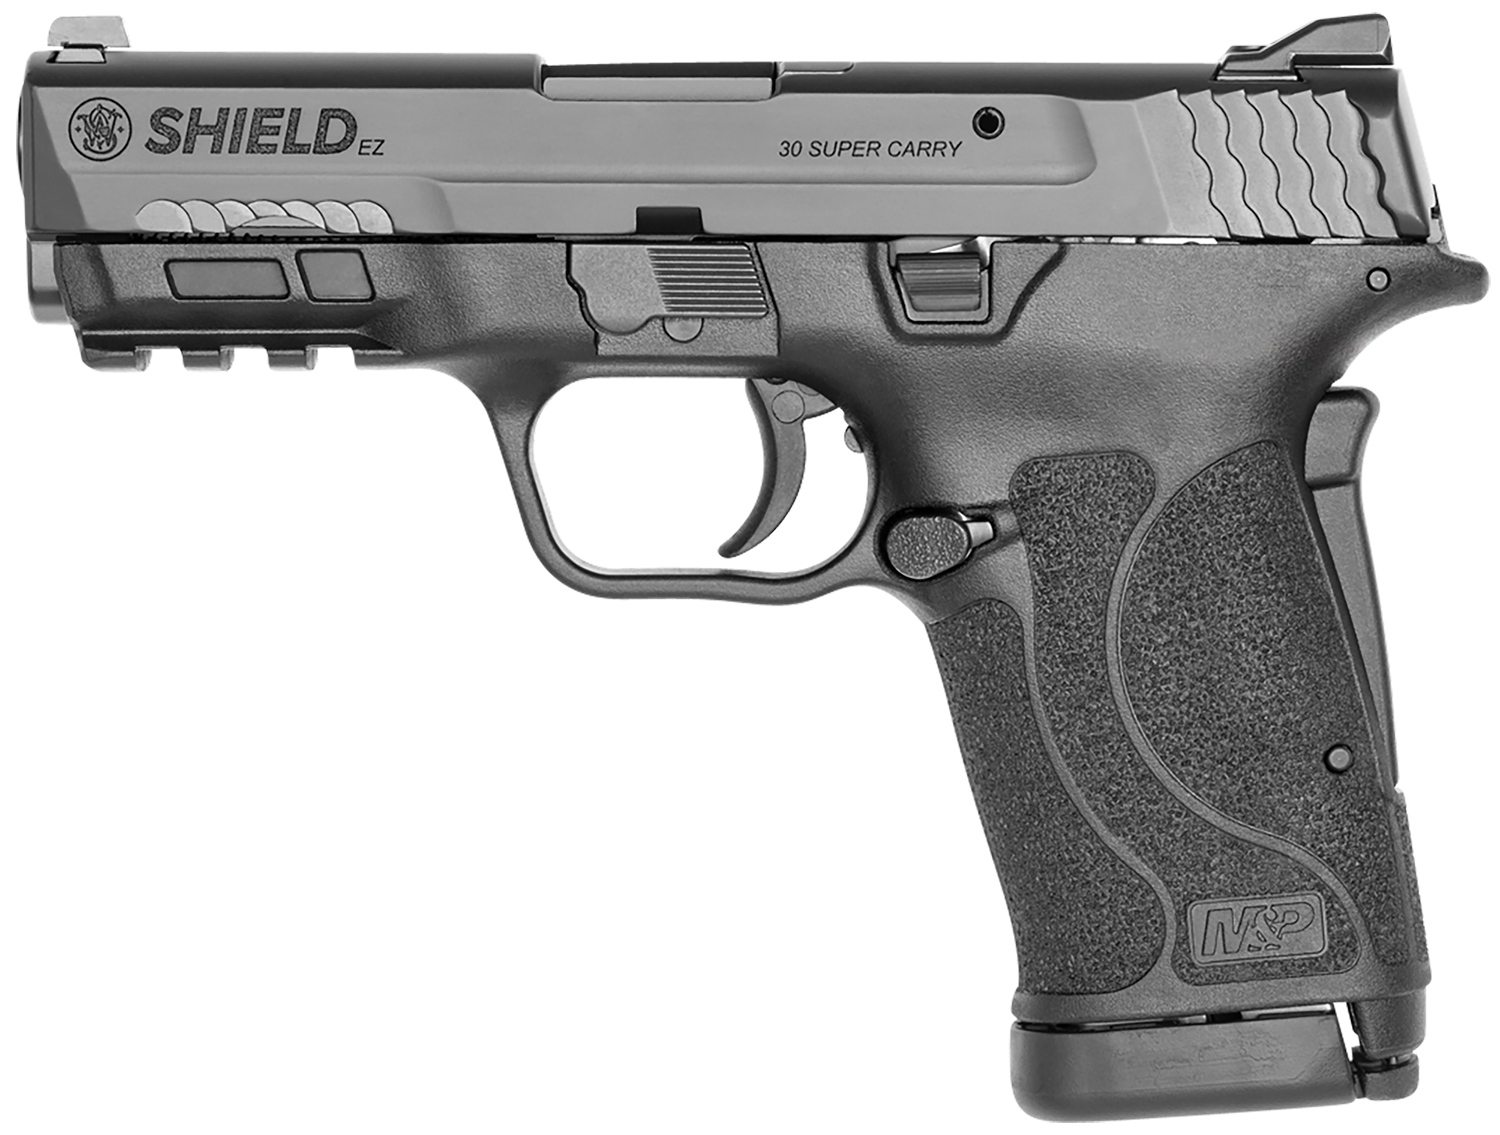 https://cityarsenal.com/product/smith-wesson-mp-shield-ez-30-super-carry-pistol-black-13459/